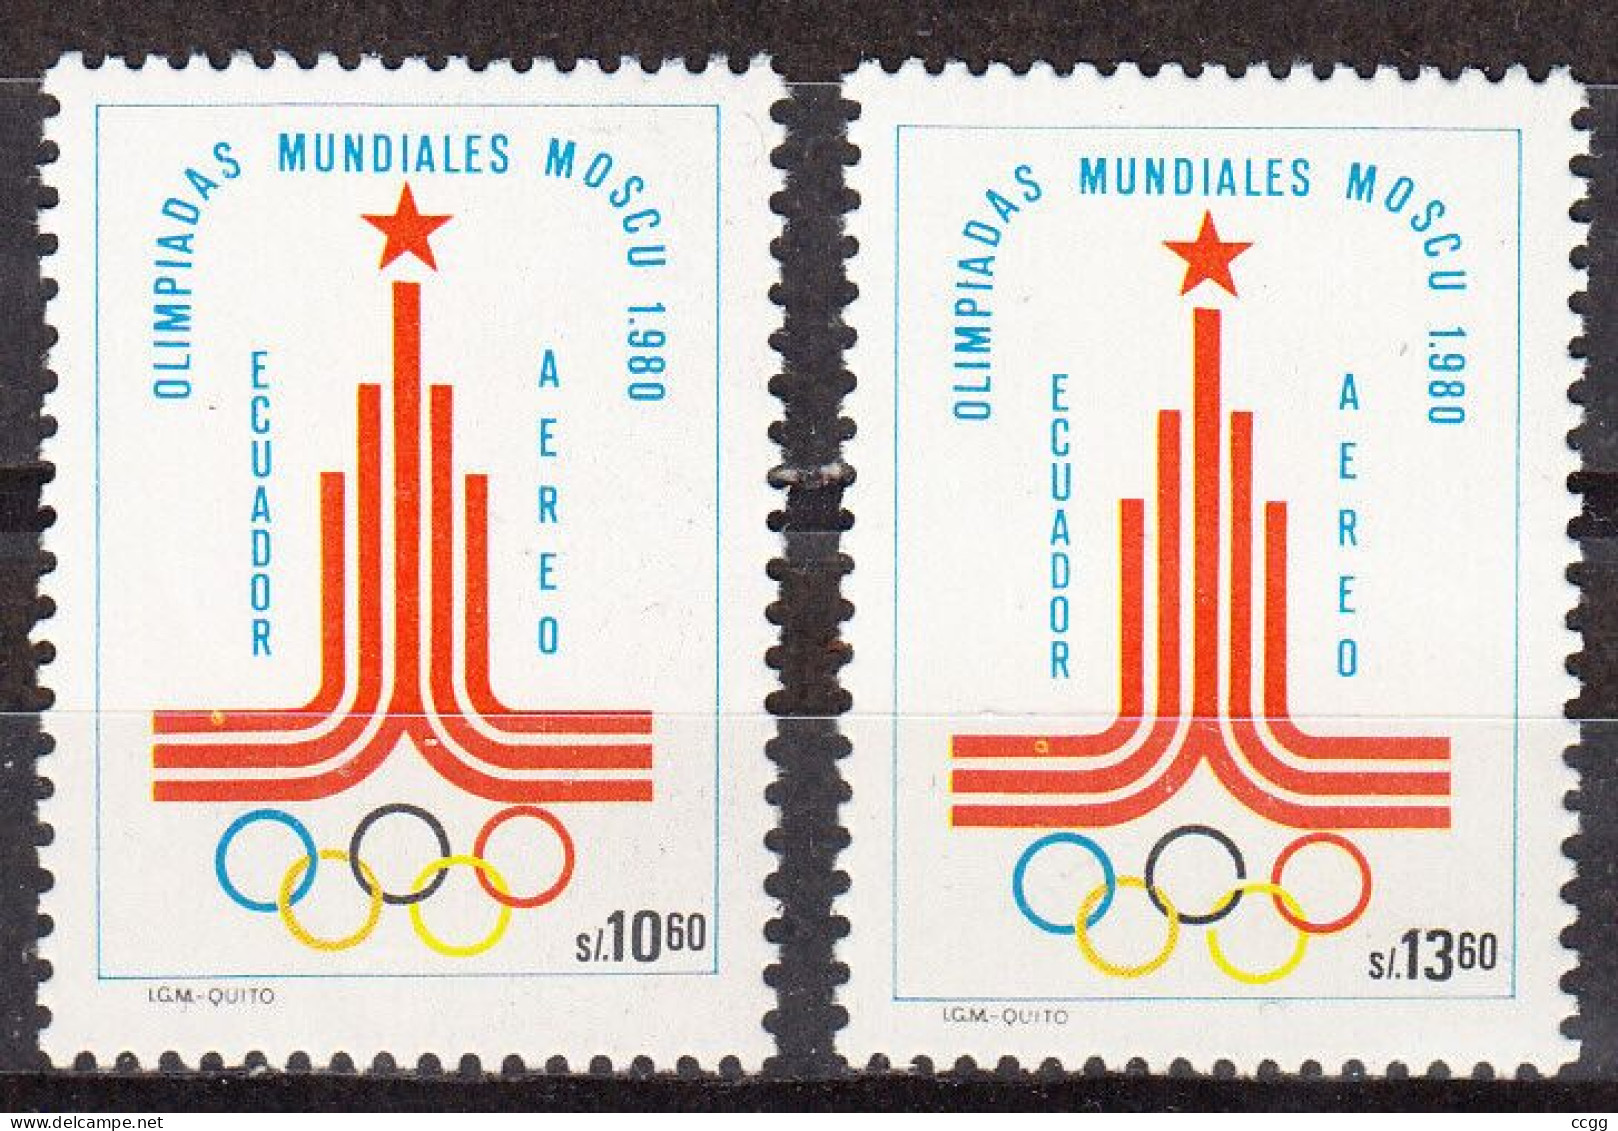 Olympische Spelen  1980 , Ecuador - Zegels Postfris - Sommer 1980: Moskau